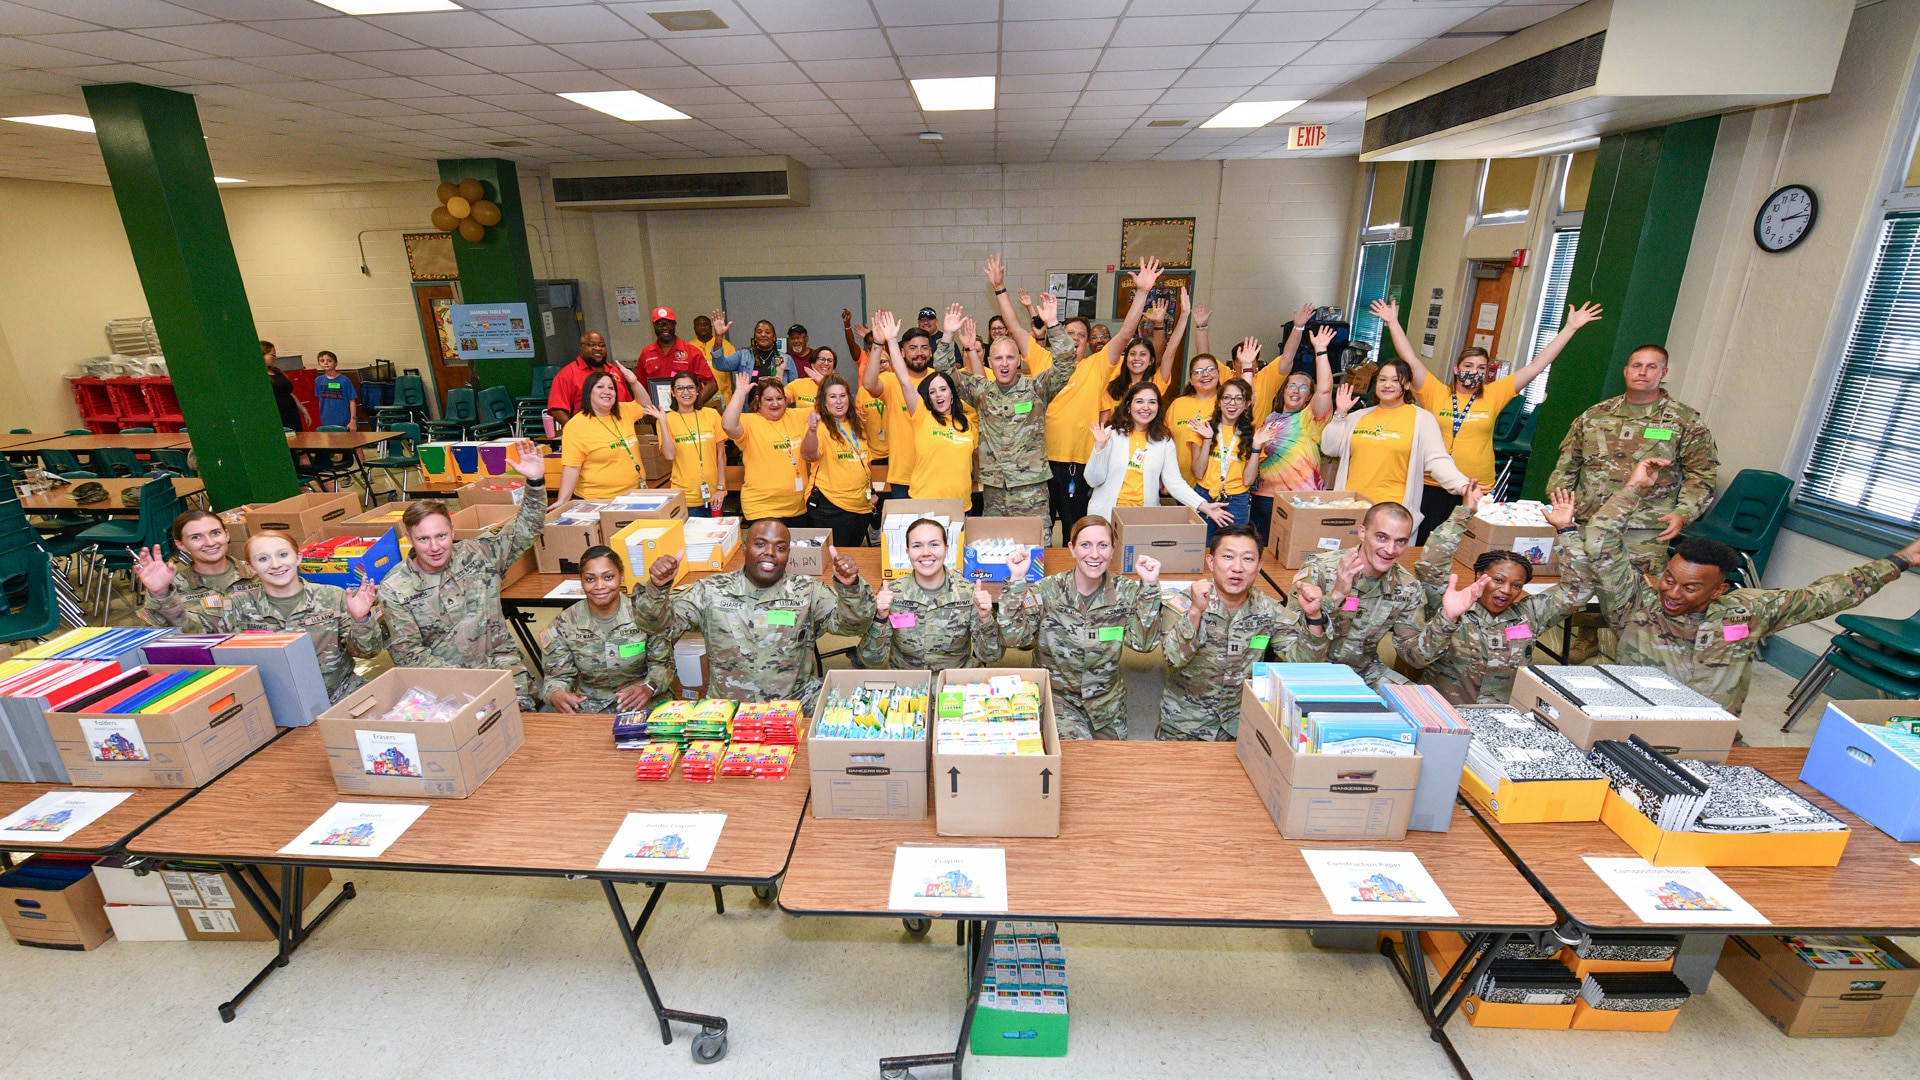 187th Medical Battalion helps Briscoe Elementary School students